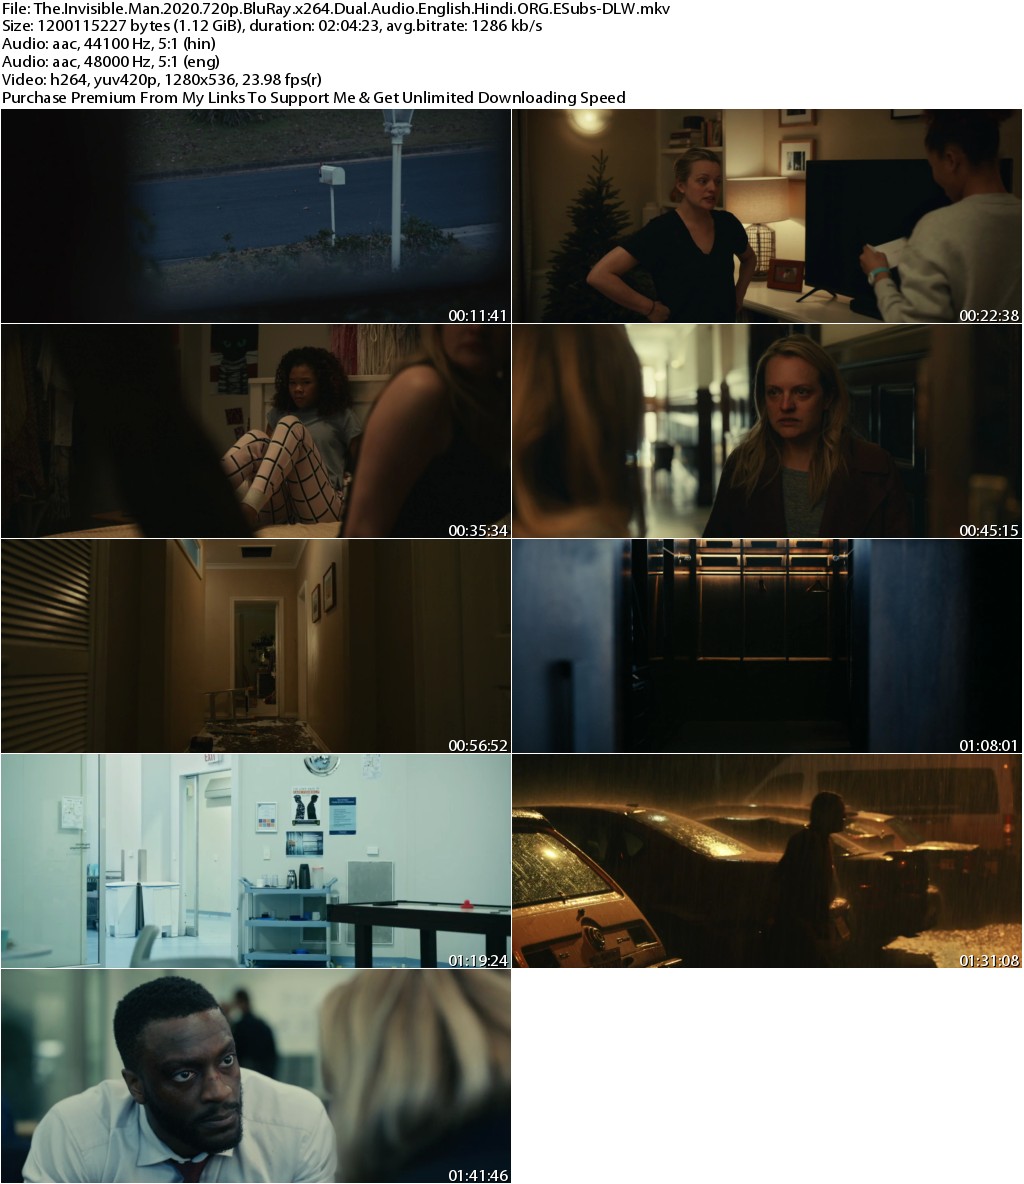 The Invisible Man (2020) 720p BluRay x264 Dual Audio English Hindi ORG ESubs-DLW